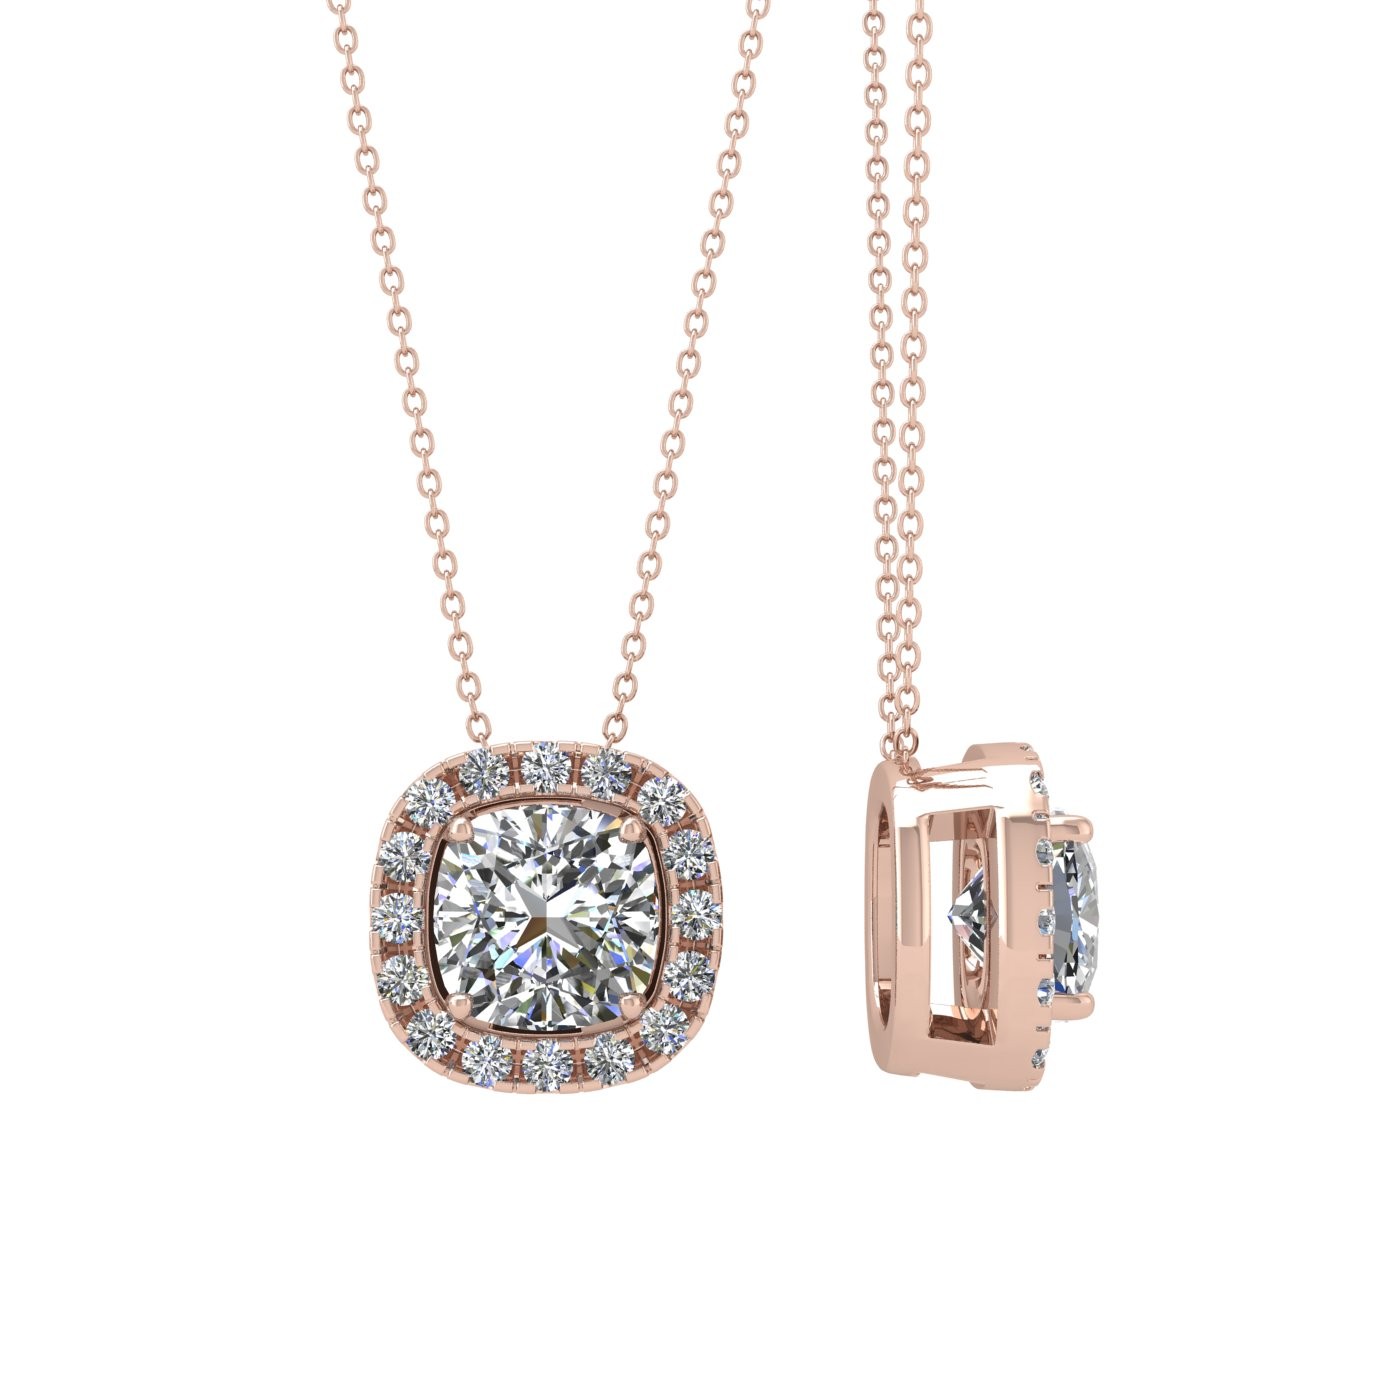 18k rose gold  0,5 ct 4 prongs cushion shape diamond pendant with diamond pavÉ set halo Photos & images